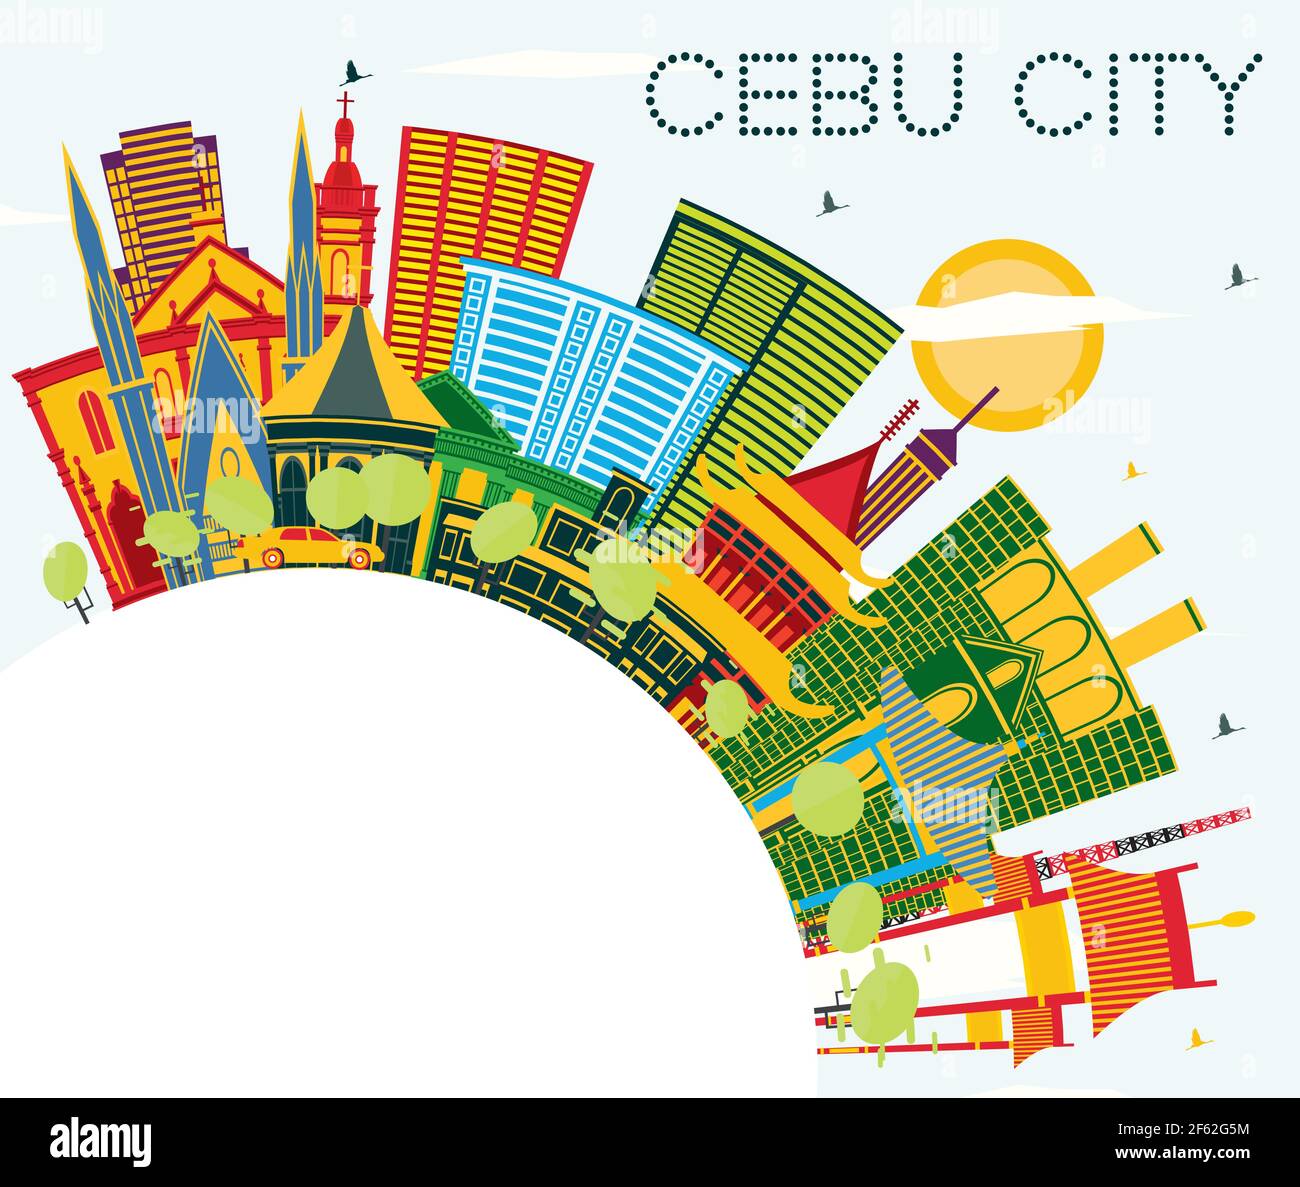 Cebu City Philippines Skyline mit Color Buildings, Blue Sky und Copy Space. Vektorgrafik. Business Travel und Tourismus Konzept mit modernen. Stock Vektor